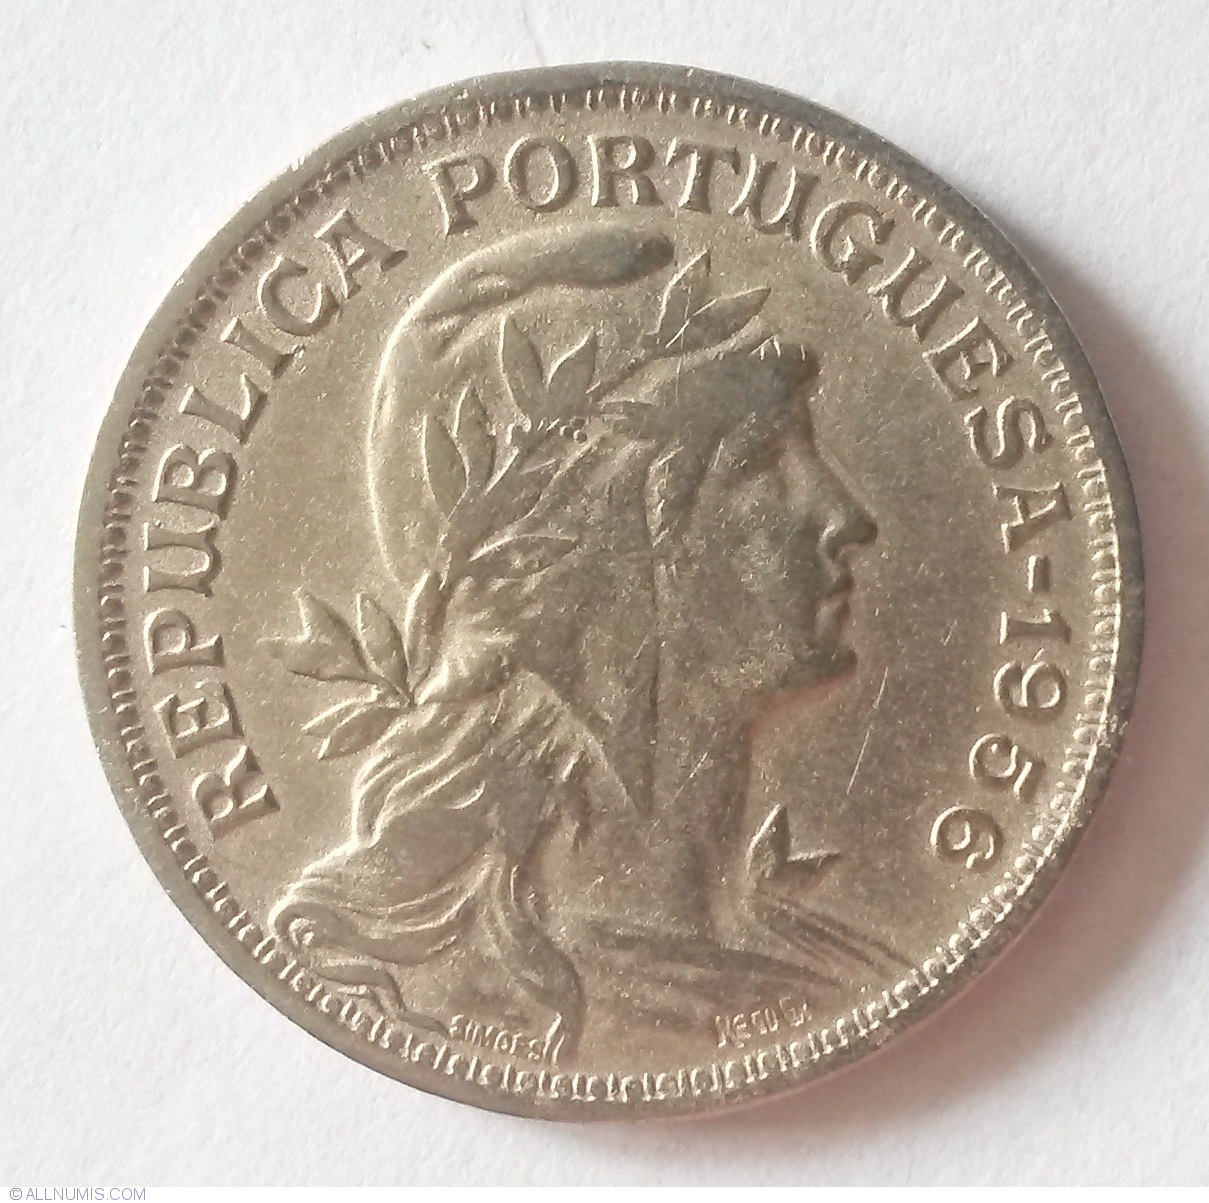 50 Centavos 1956, Republic (1910-1960) - Portugal - Coin - 37976